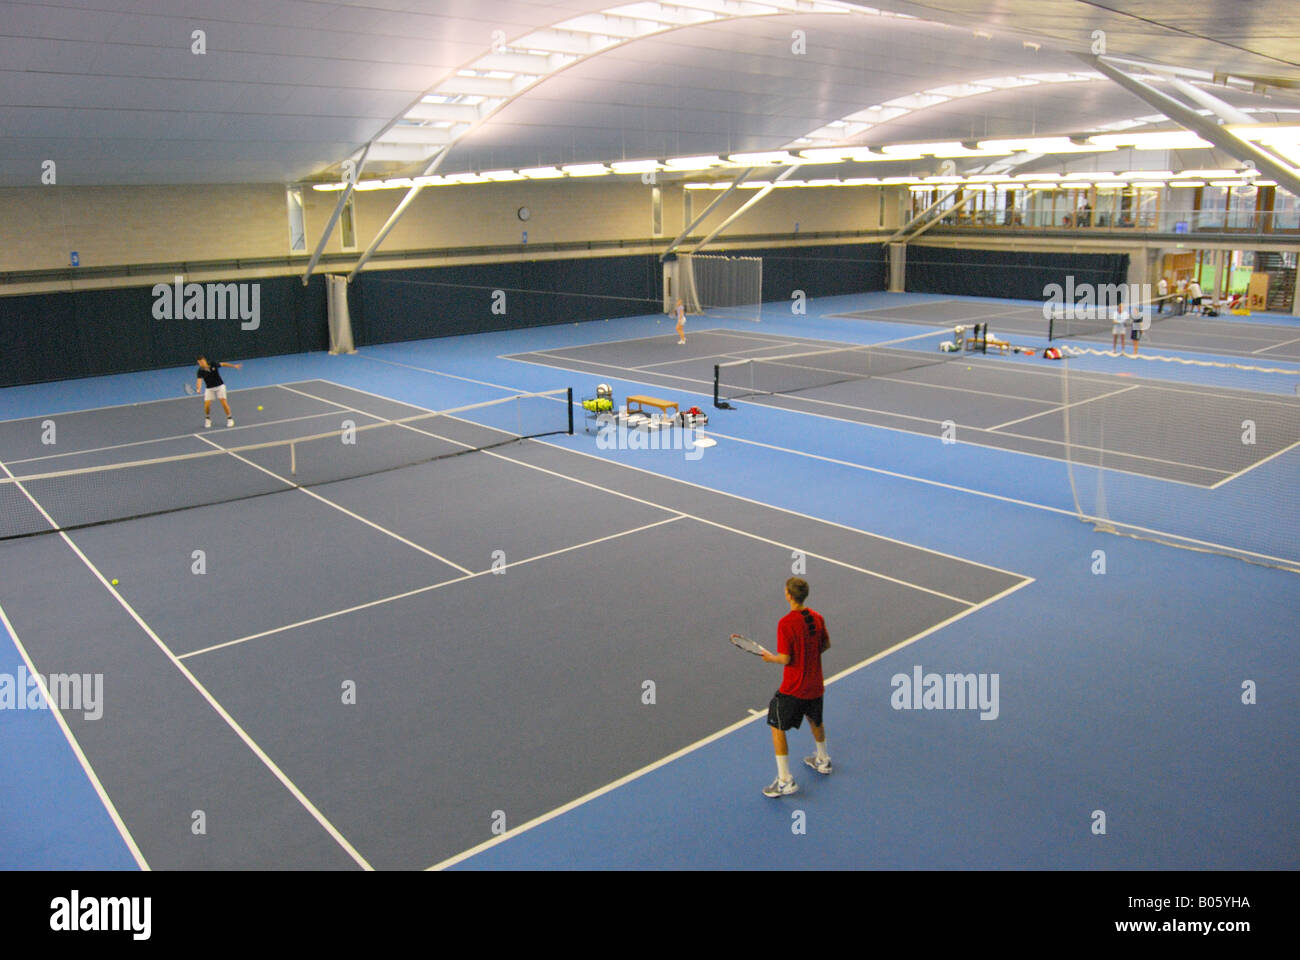 Hallenplätze, Nationales Tenniszentrum, Priory Lane, Roehampton, London Borough of Wandsworth, Greater London, England, Vereinigtes Königreich Stockfoto